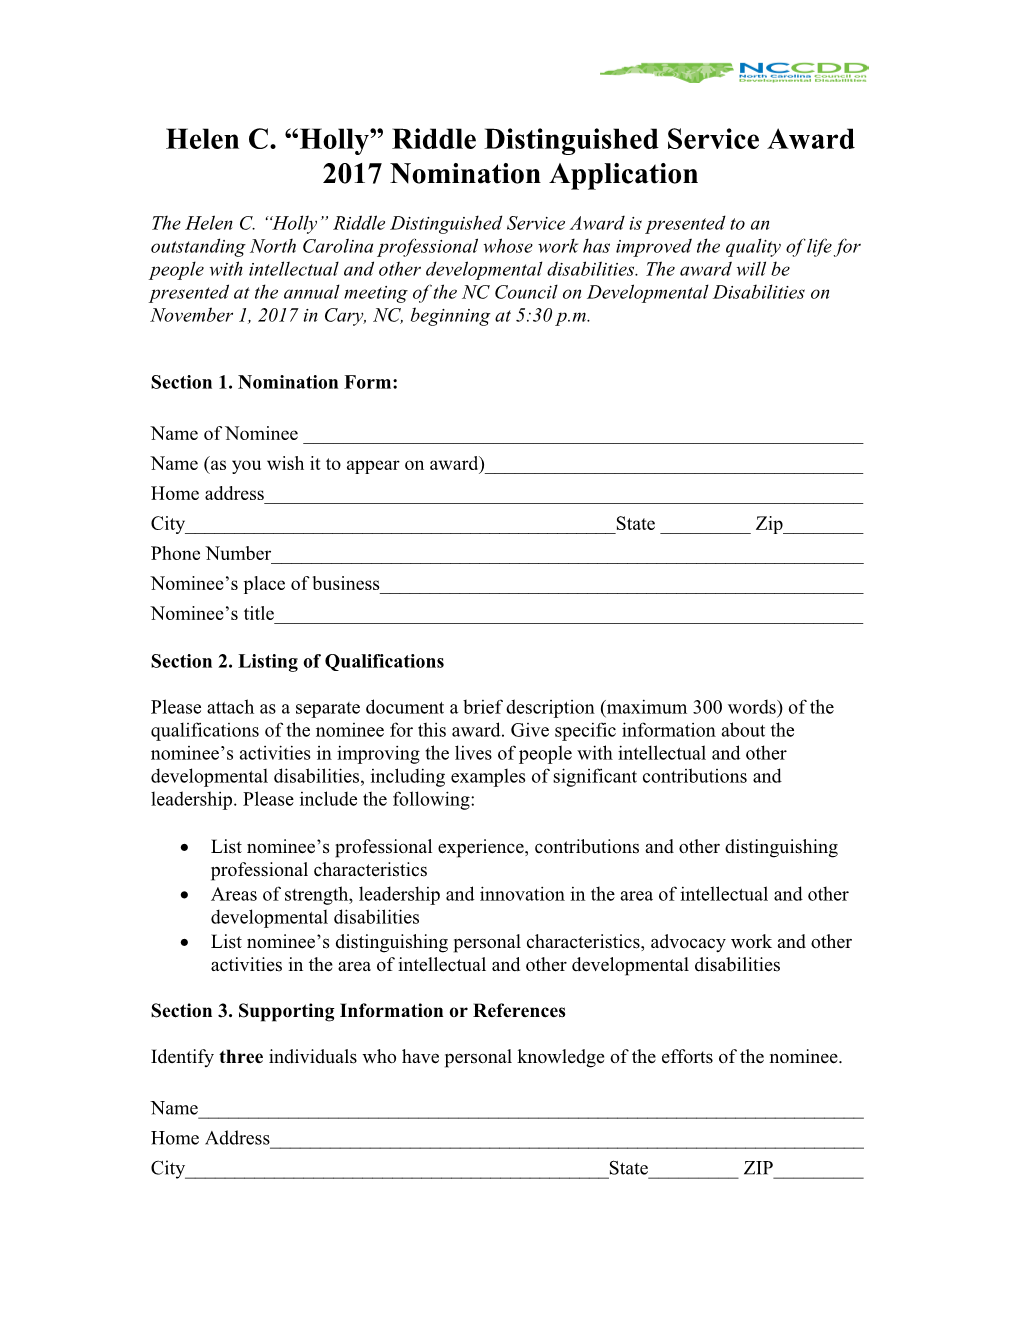 Helen C. Holly Riddle Distinguished Service Award 2017 Nomination Application